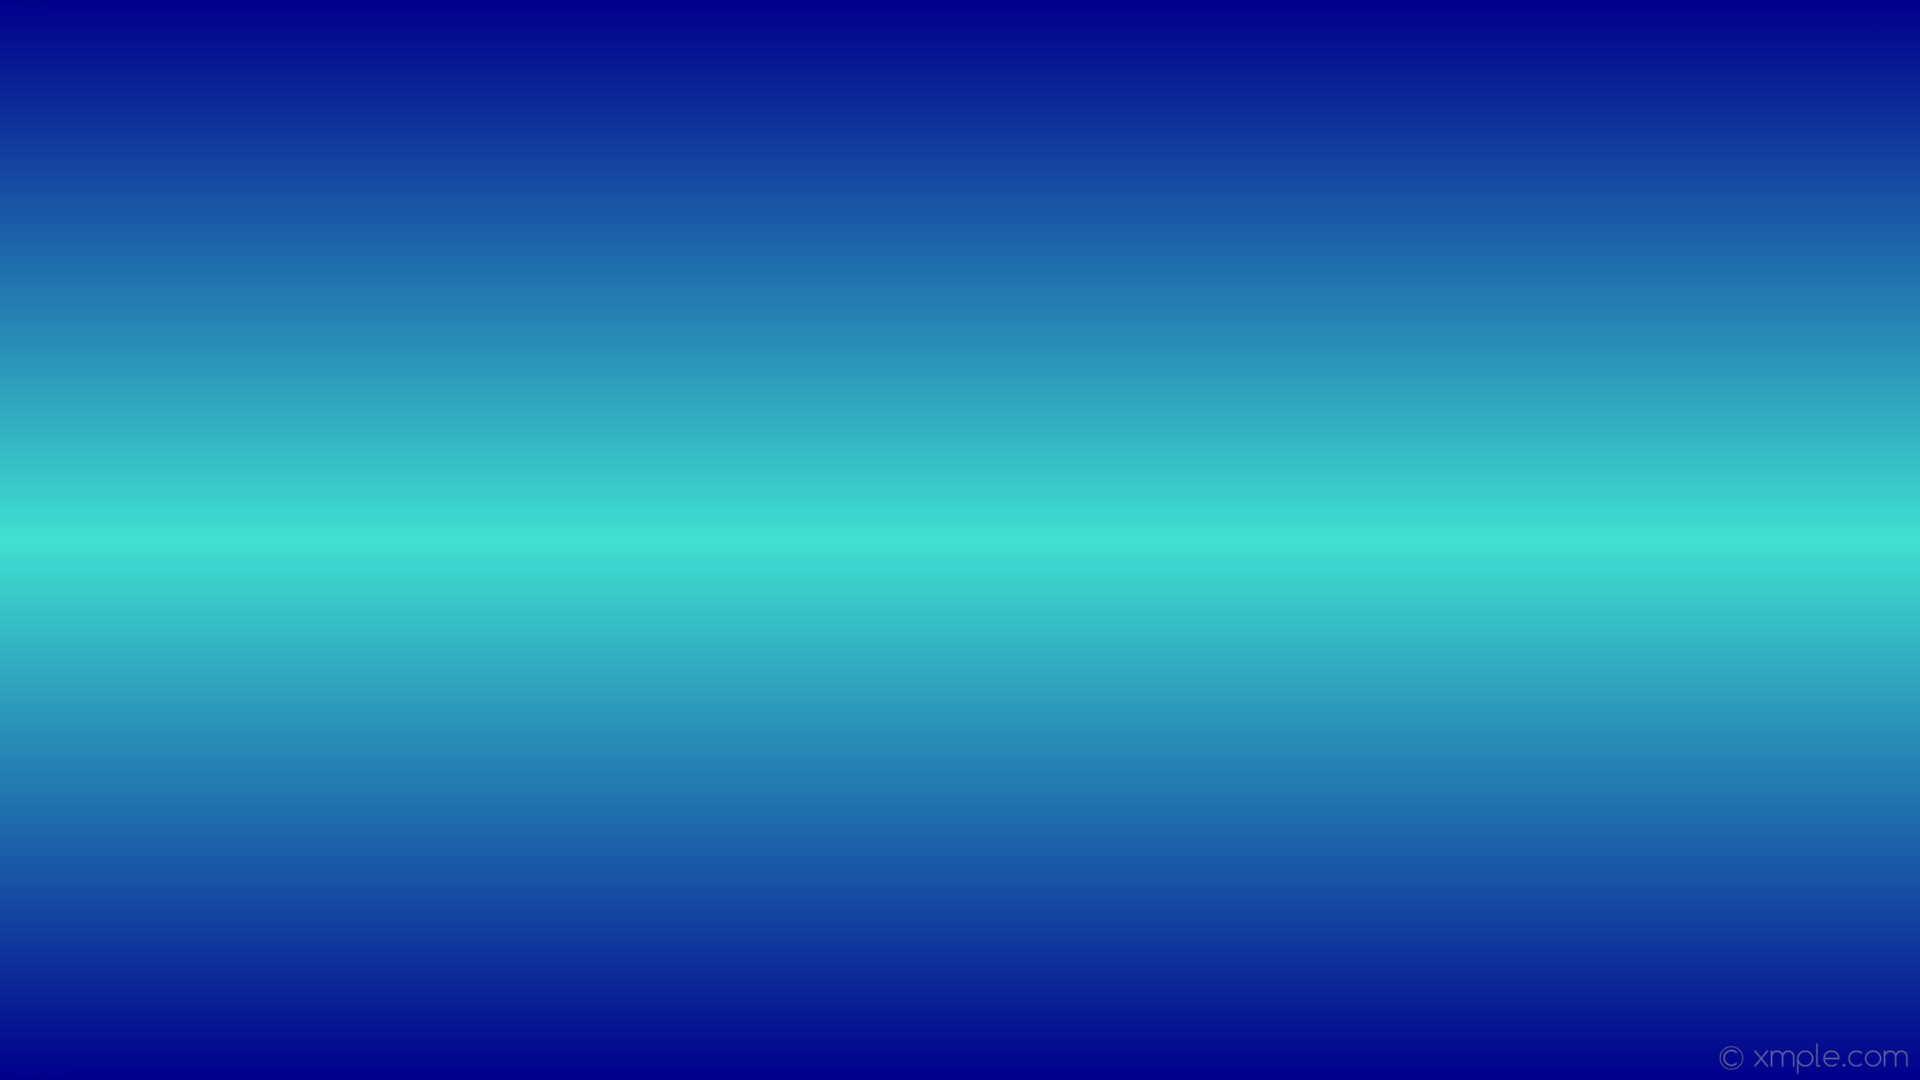 Wallpaper highlight blue gradient linear dark blue turquoise b e0d0 90 50